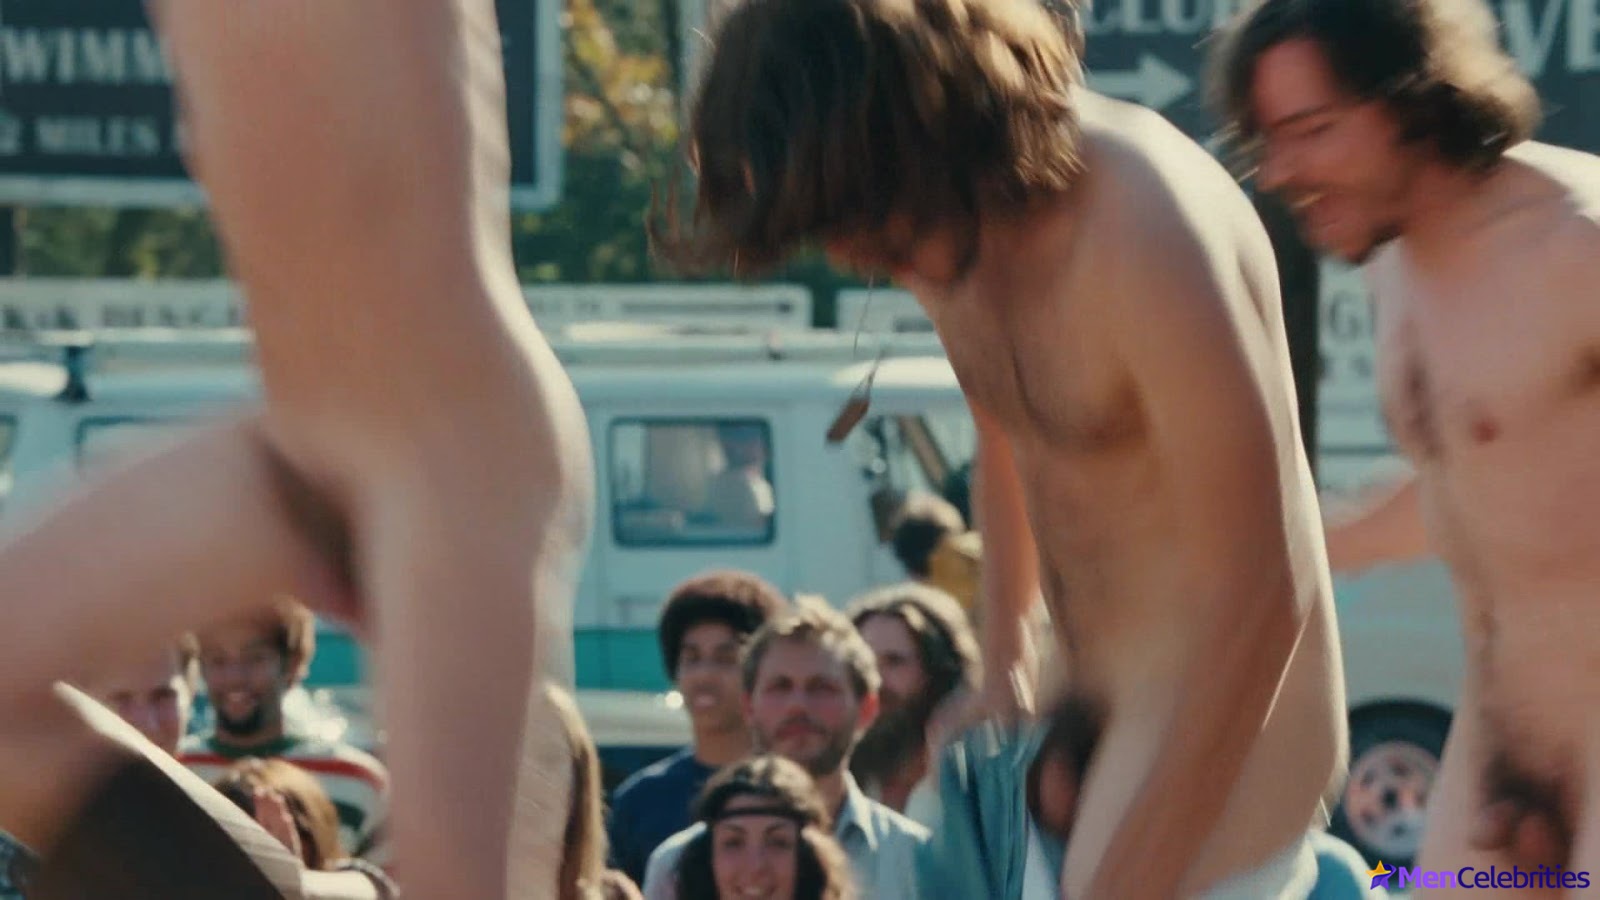 Emile Hirsch frontal nude movie scenes.